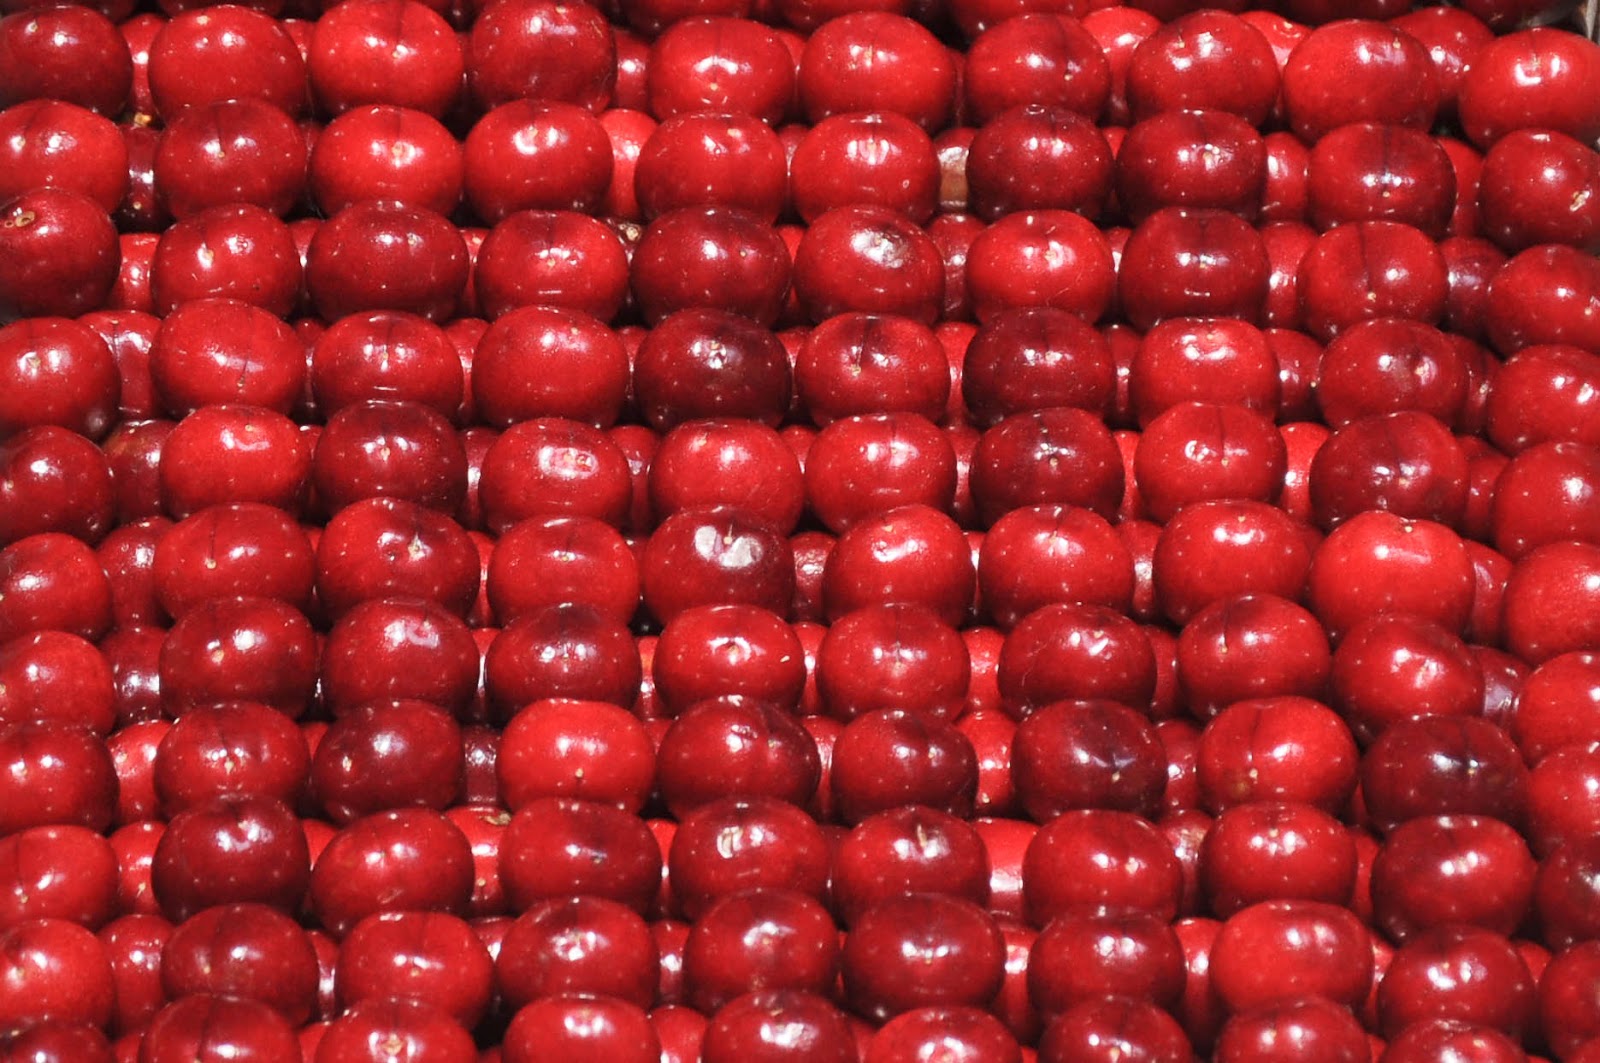 Crates of Premier Cherries, Cherry Show Market, Marostica, Veneto, Italy